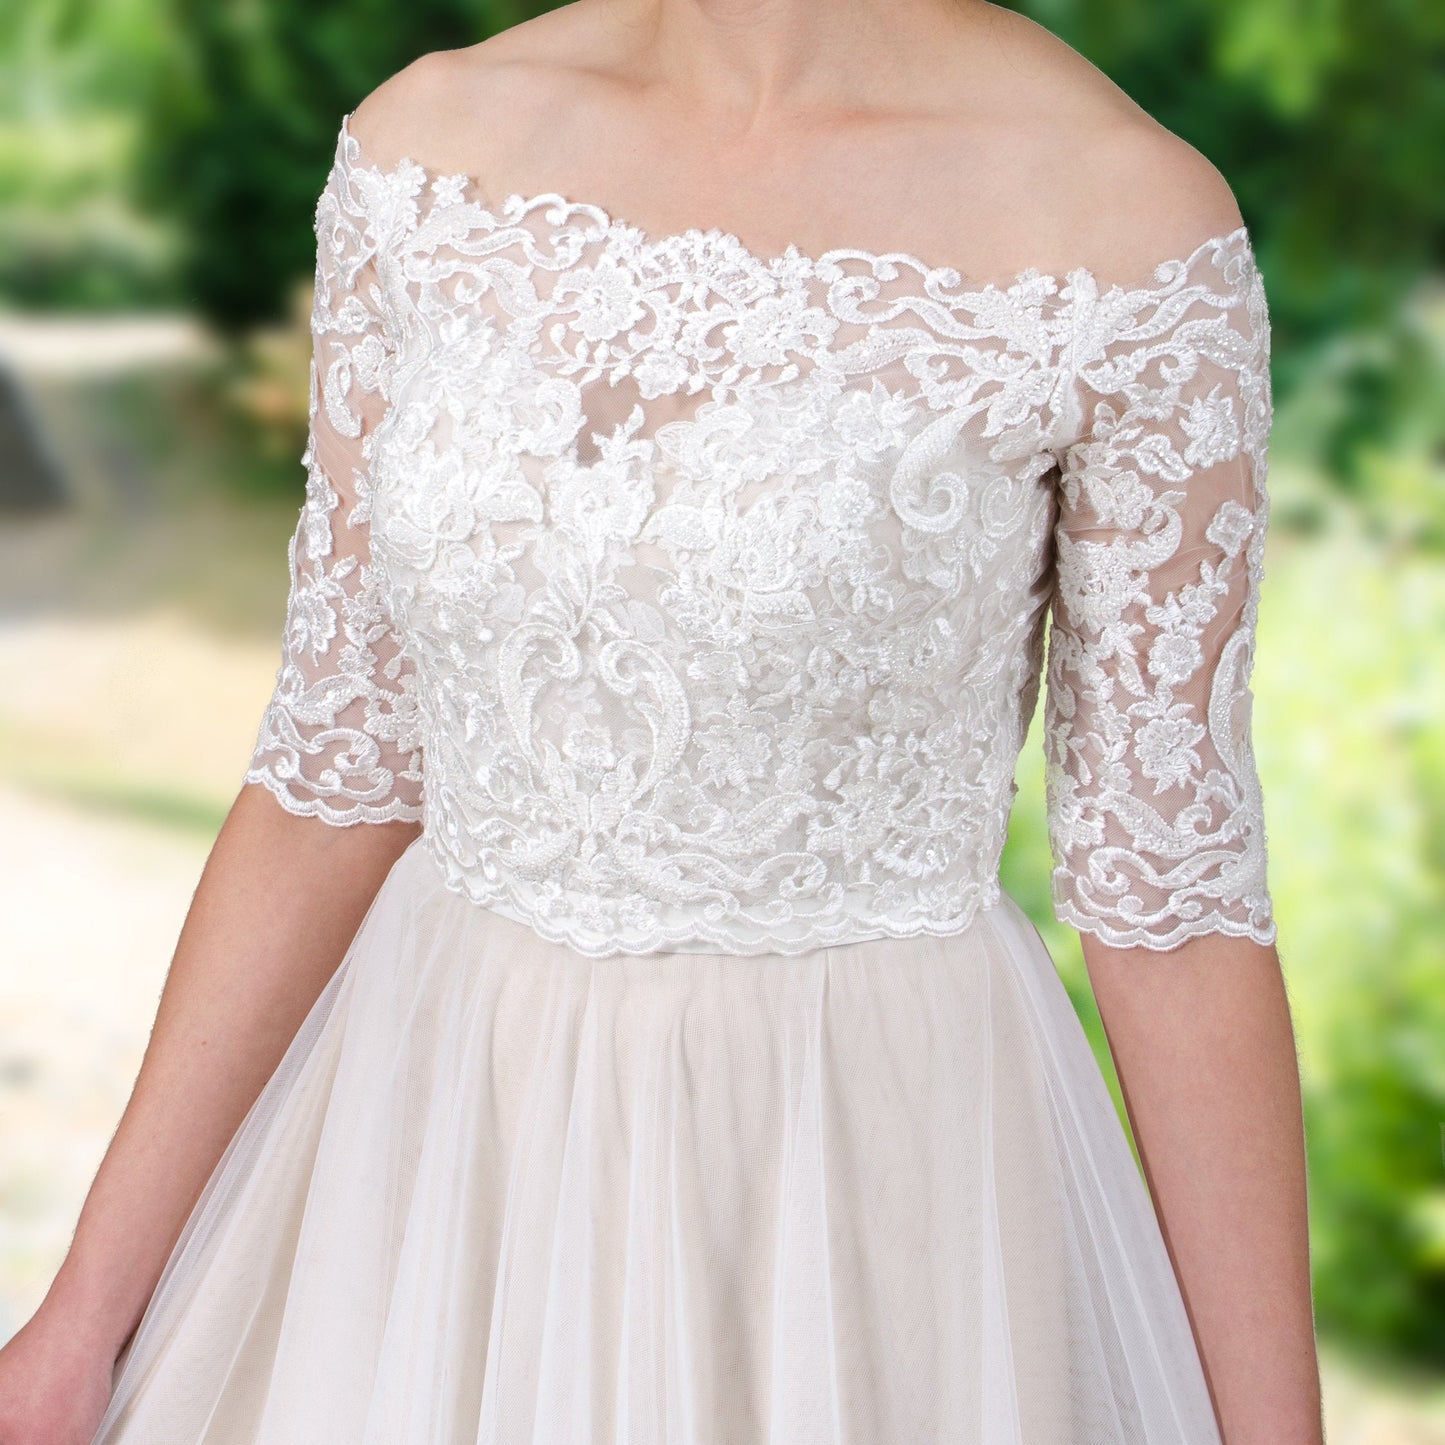 Beaded wedding dress topper Off-Shoulder lace bolero wedding bolero wedding jacket bridal lace topper WJ041